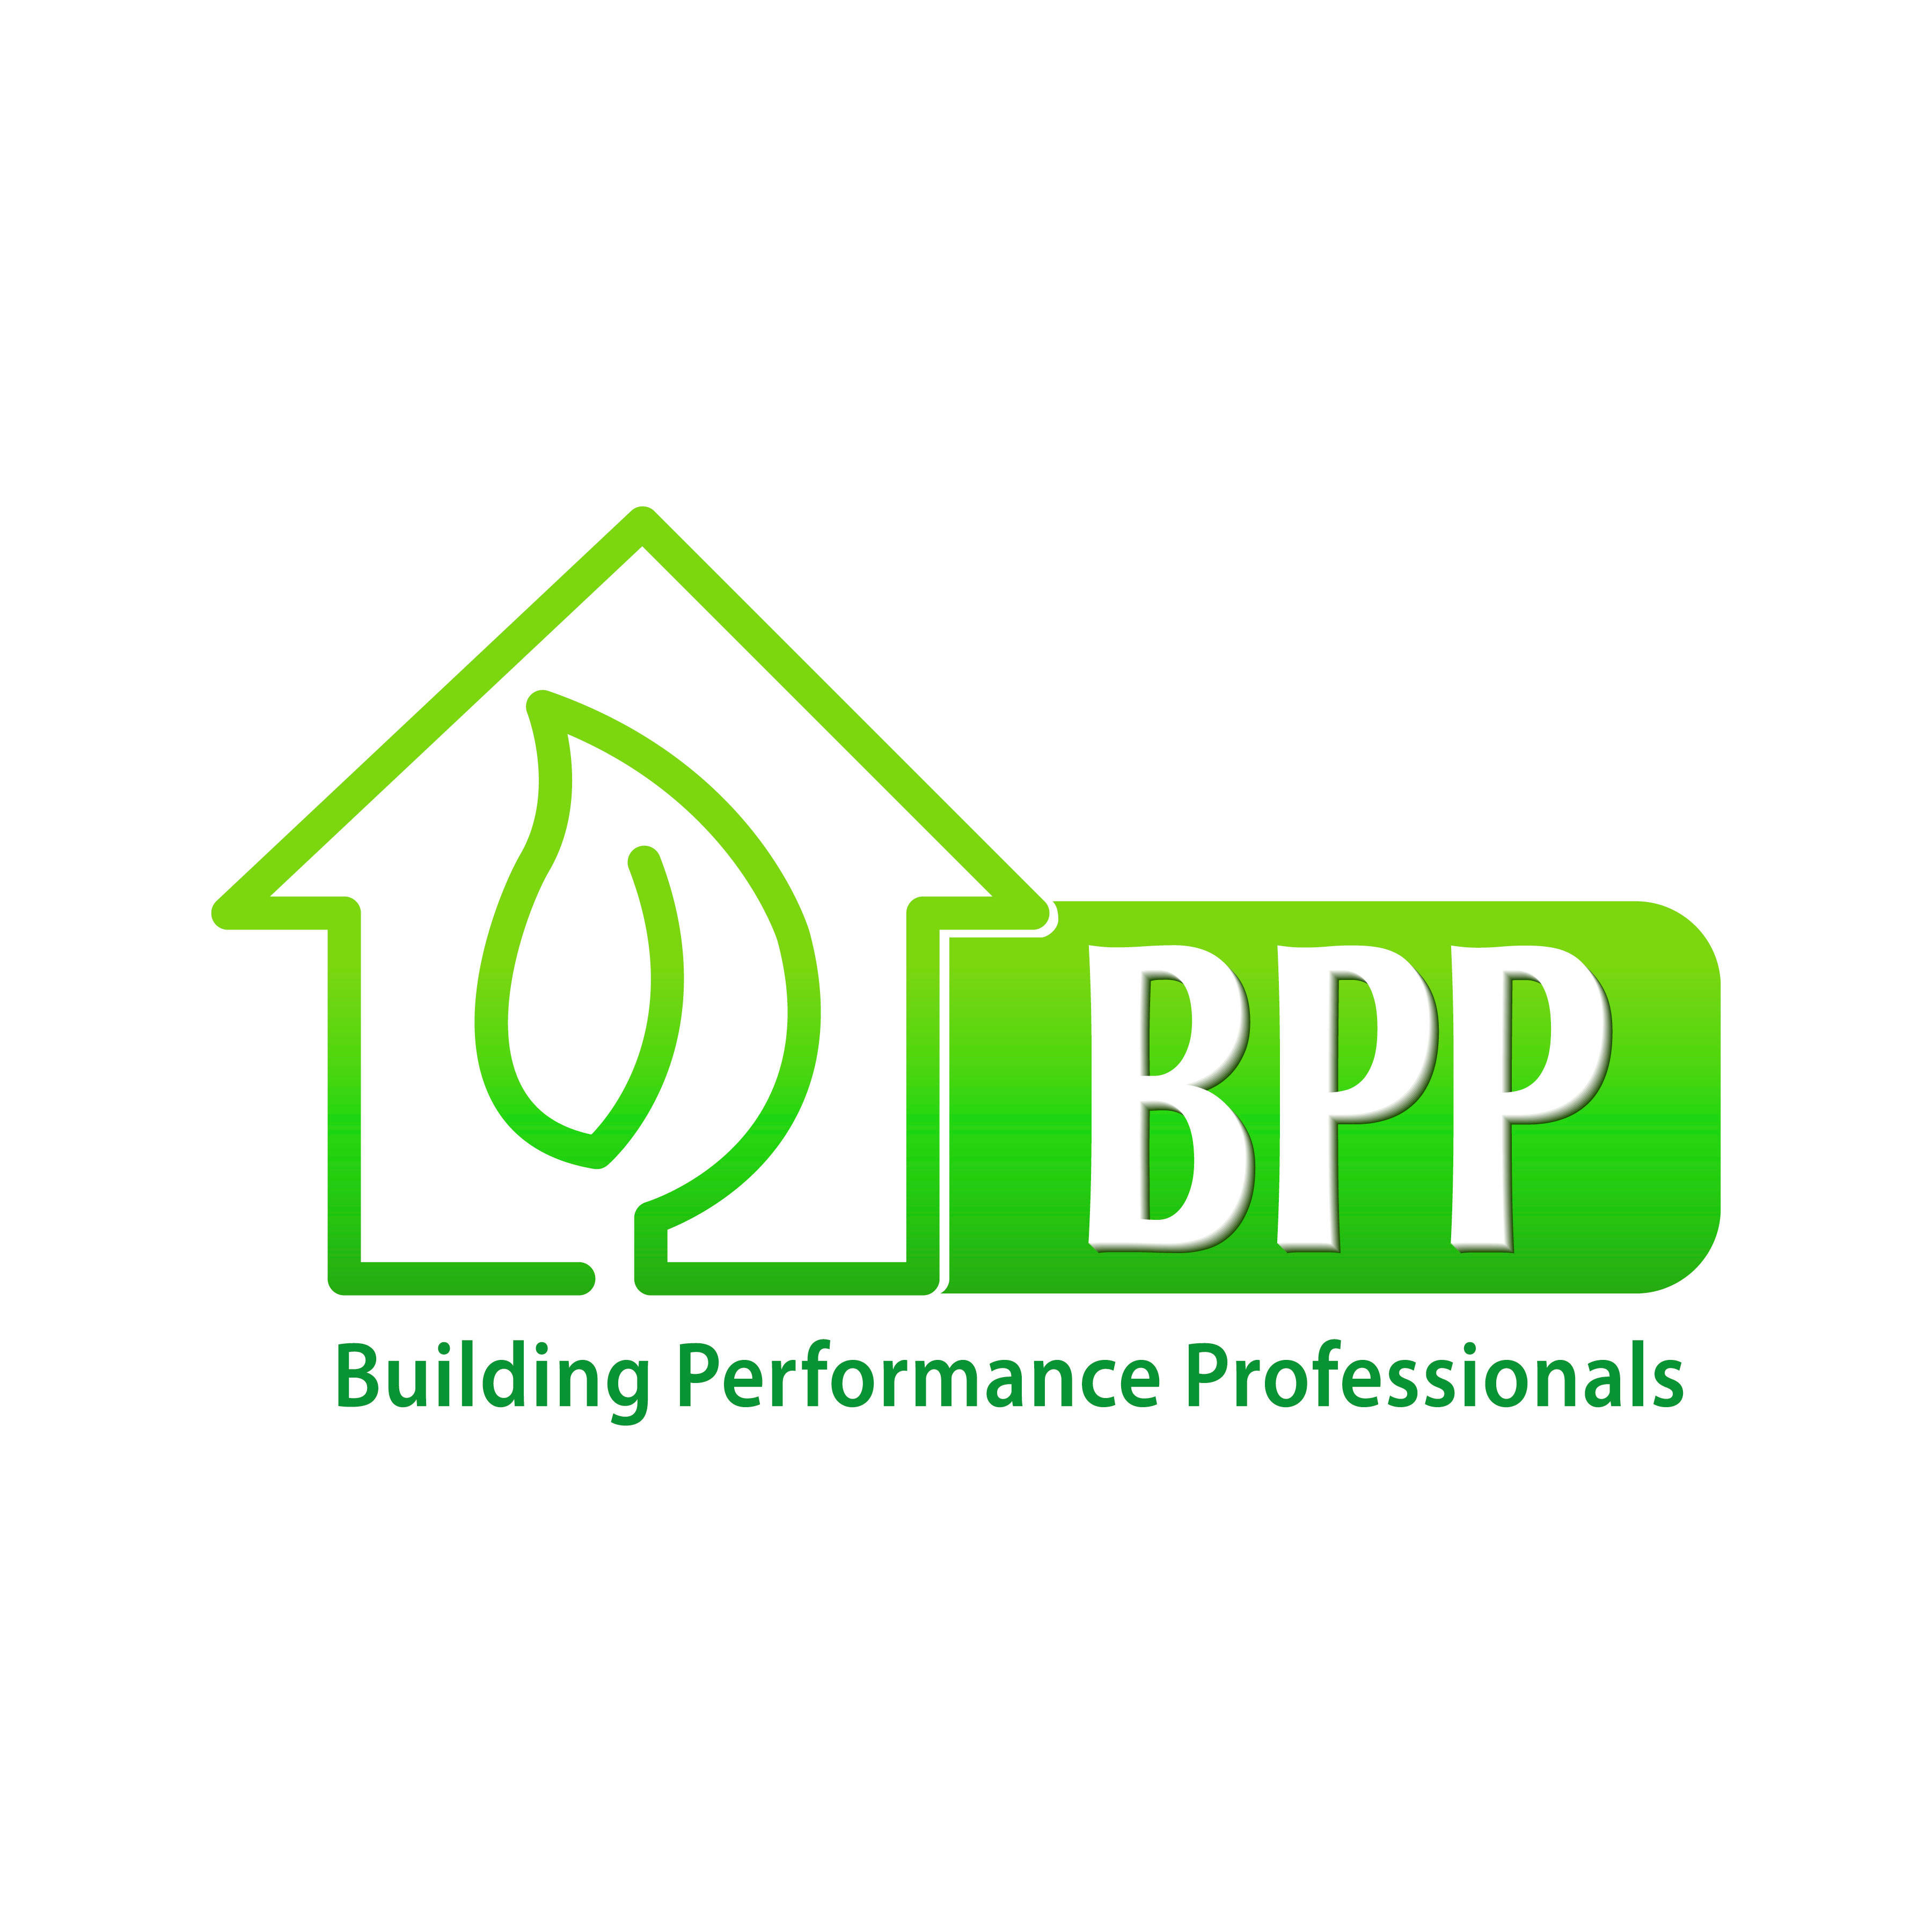 Building performance